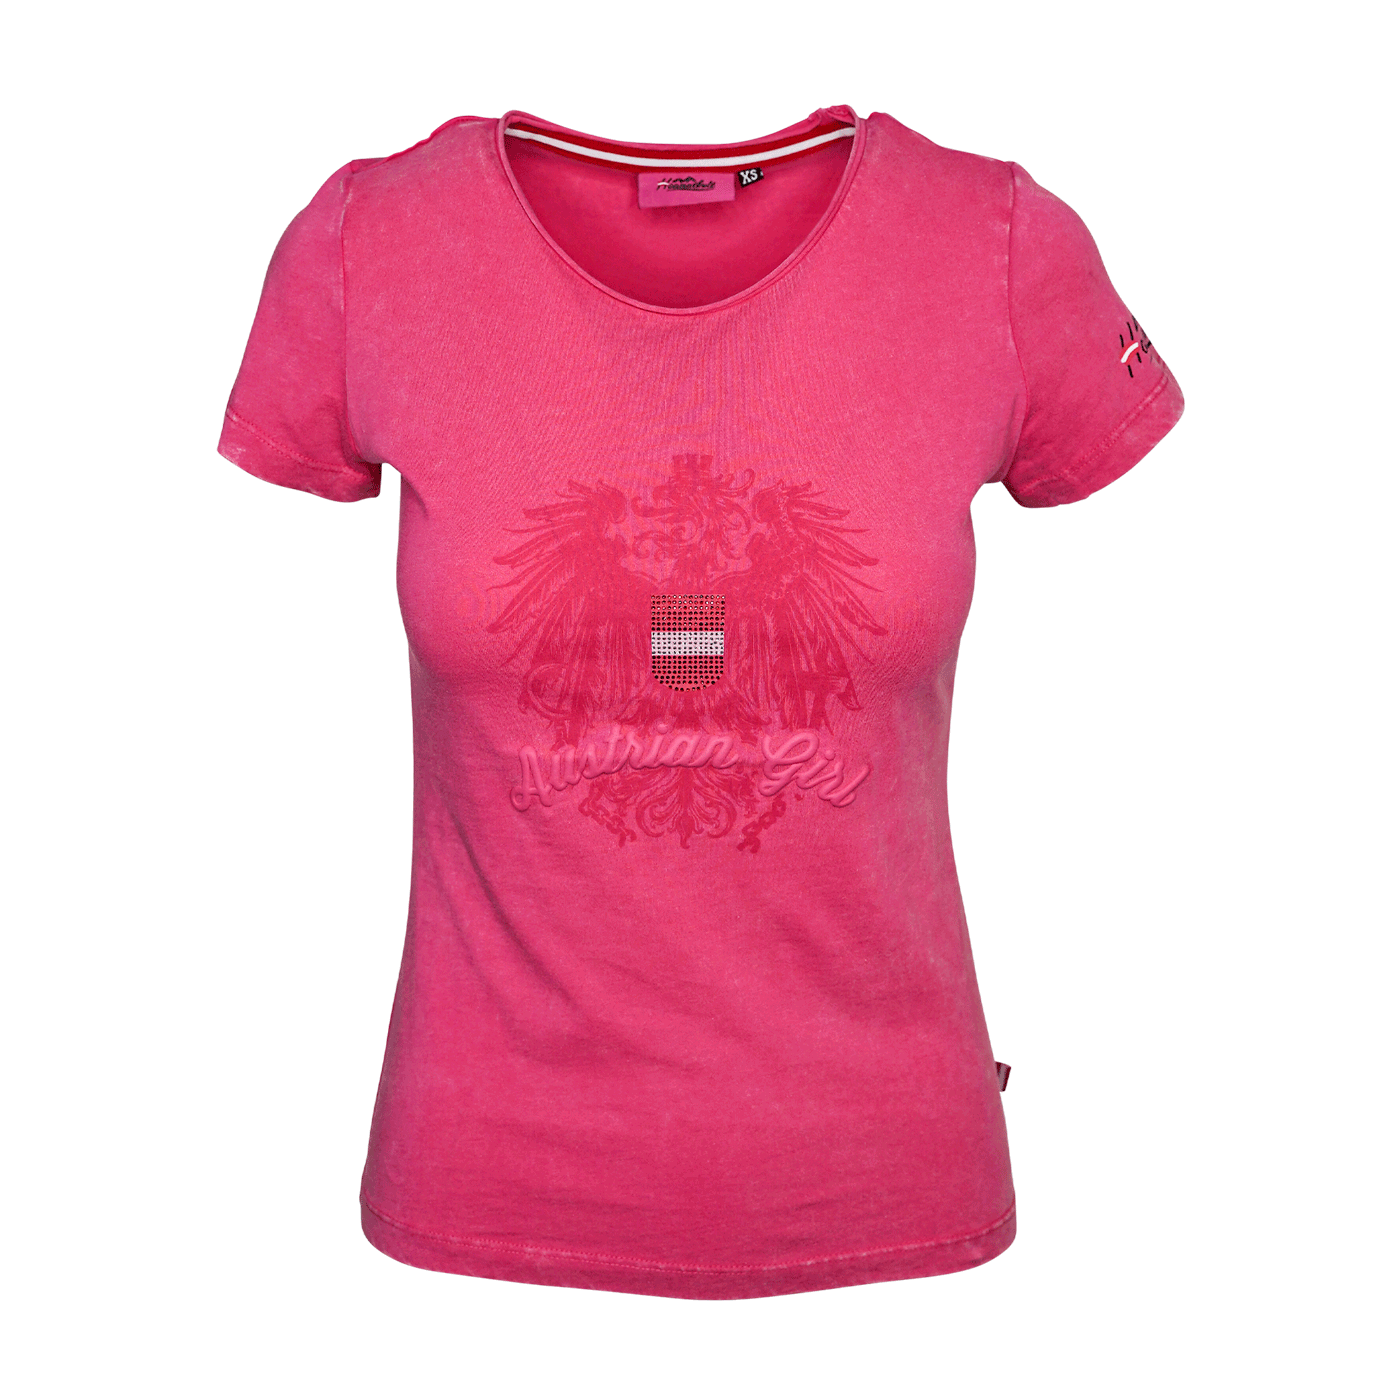 Pinkes Austrian Girl T-Shirt von Hoamatkult